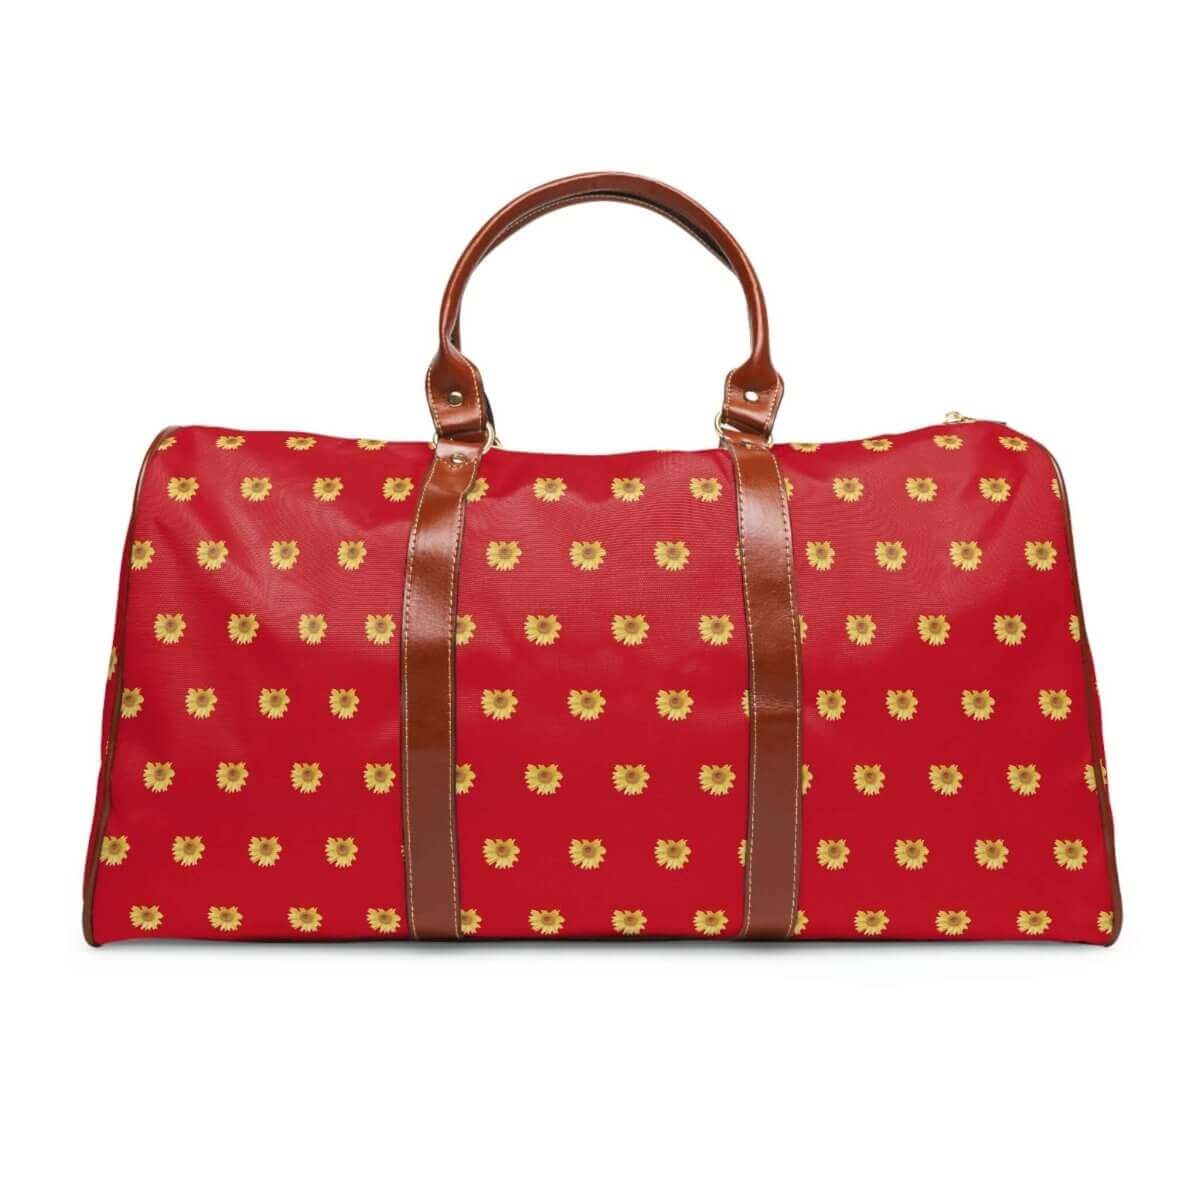 Red sunny design waterproof bag